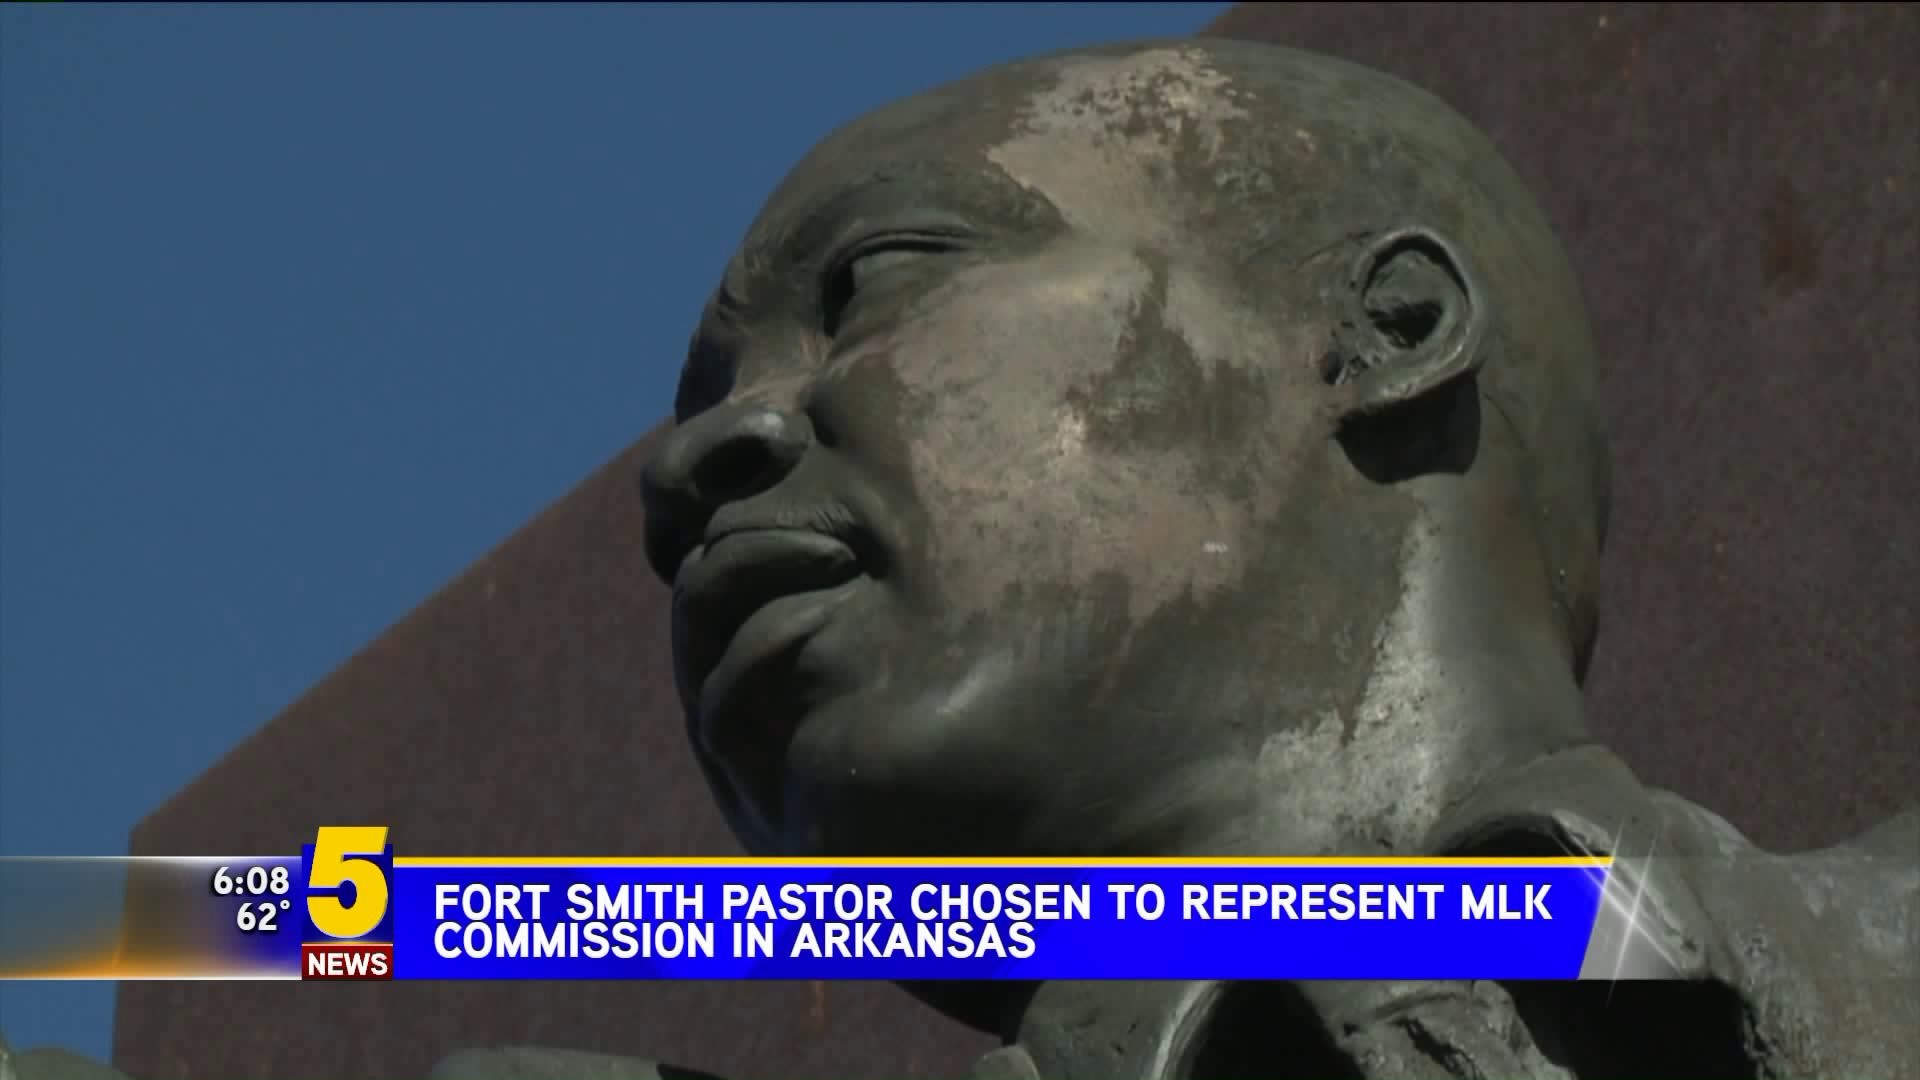 Fort Smith Pastor Chosen To Represent MLK Commission In Arkansas